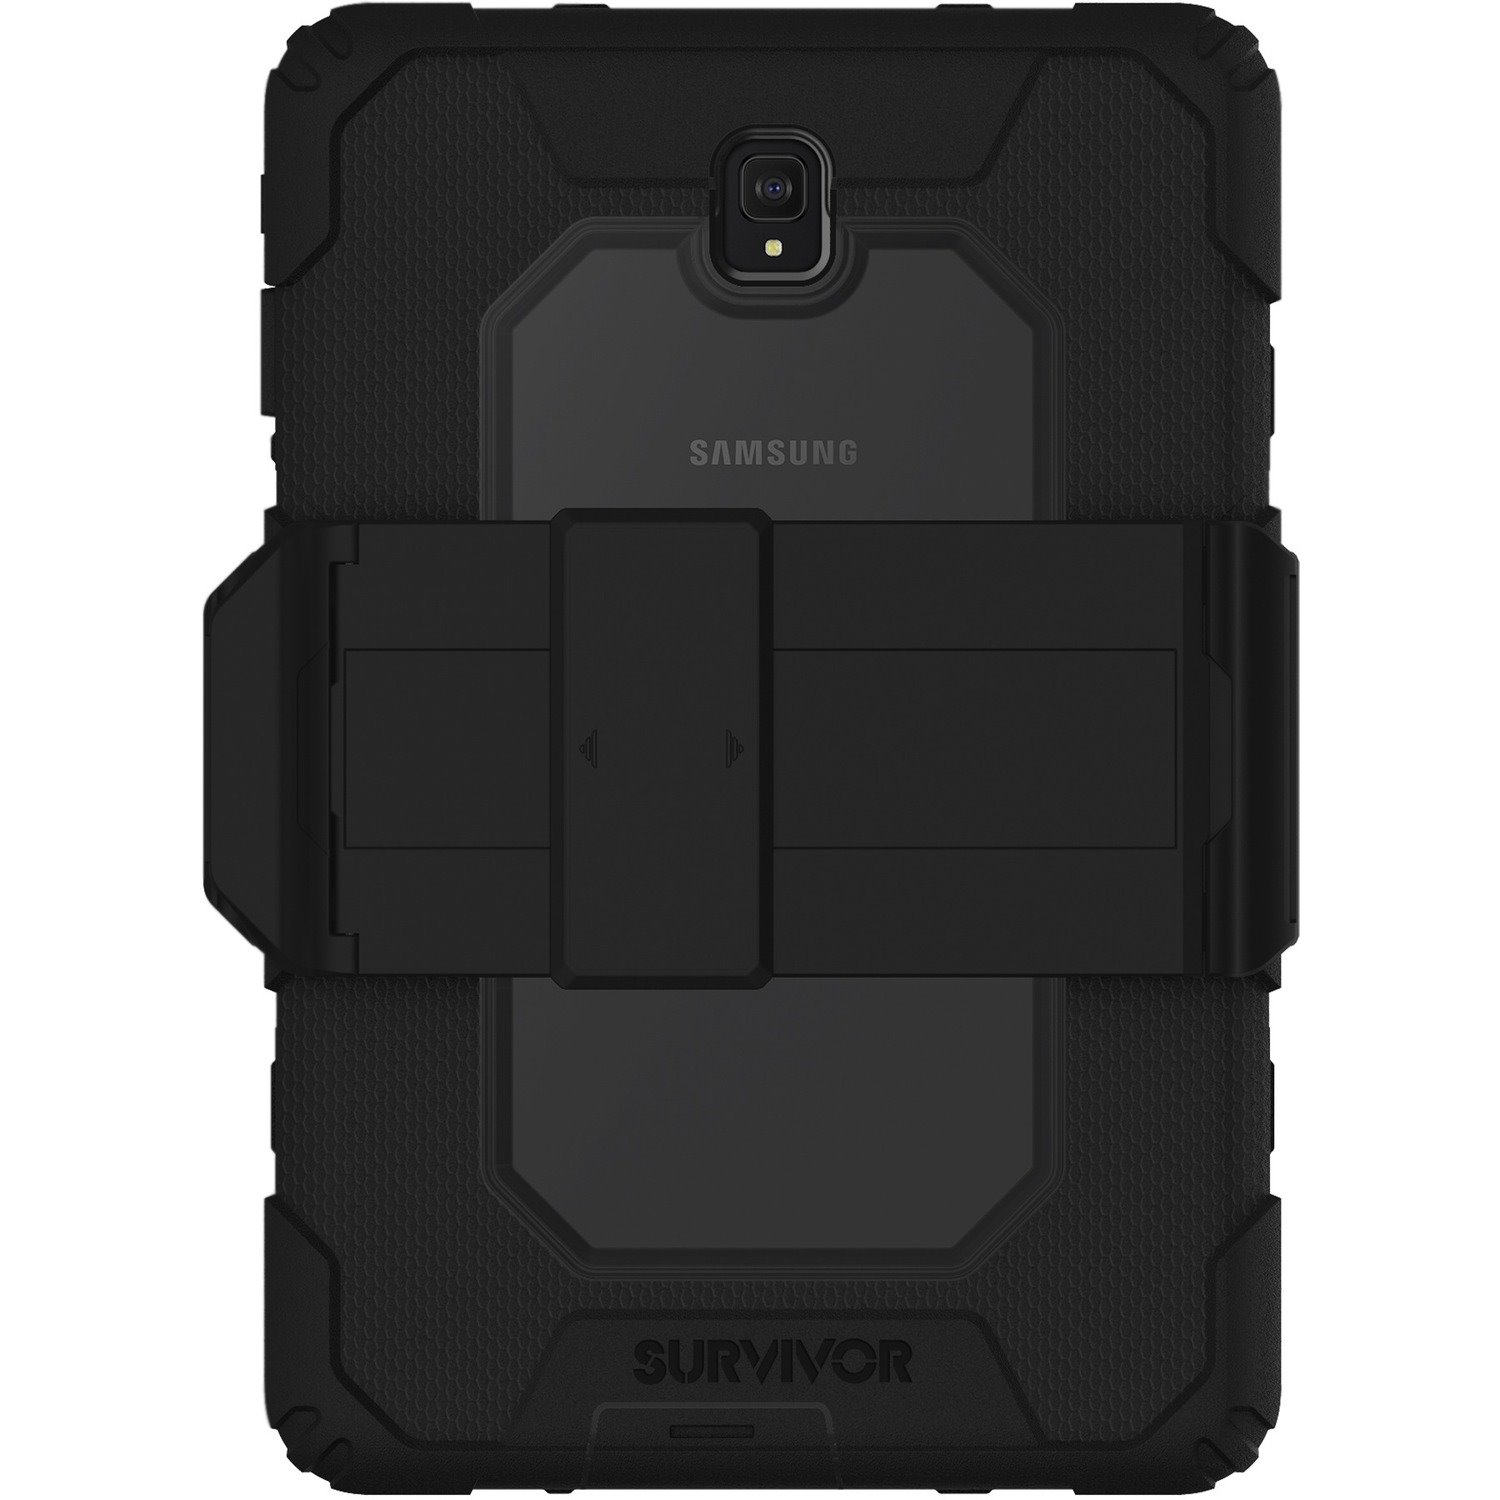 Griffin Survivor All-Terrain Case for Samsung Tablet - Texture - Black, Transparent